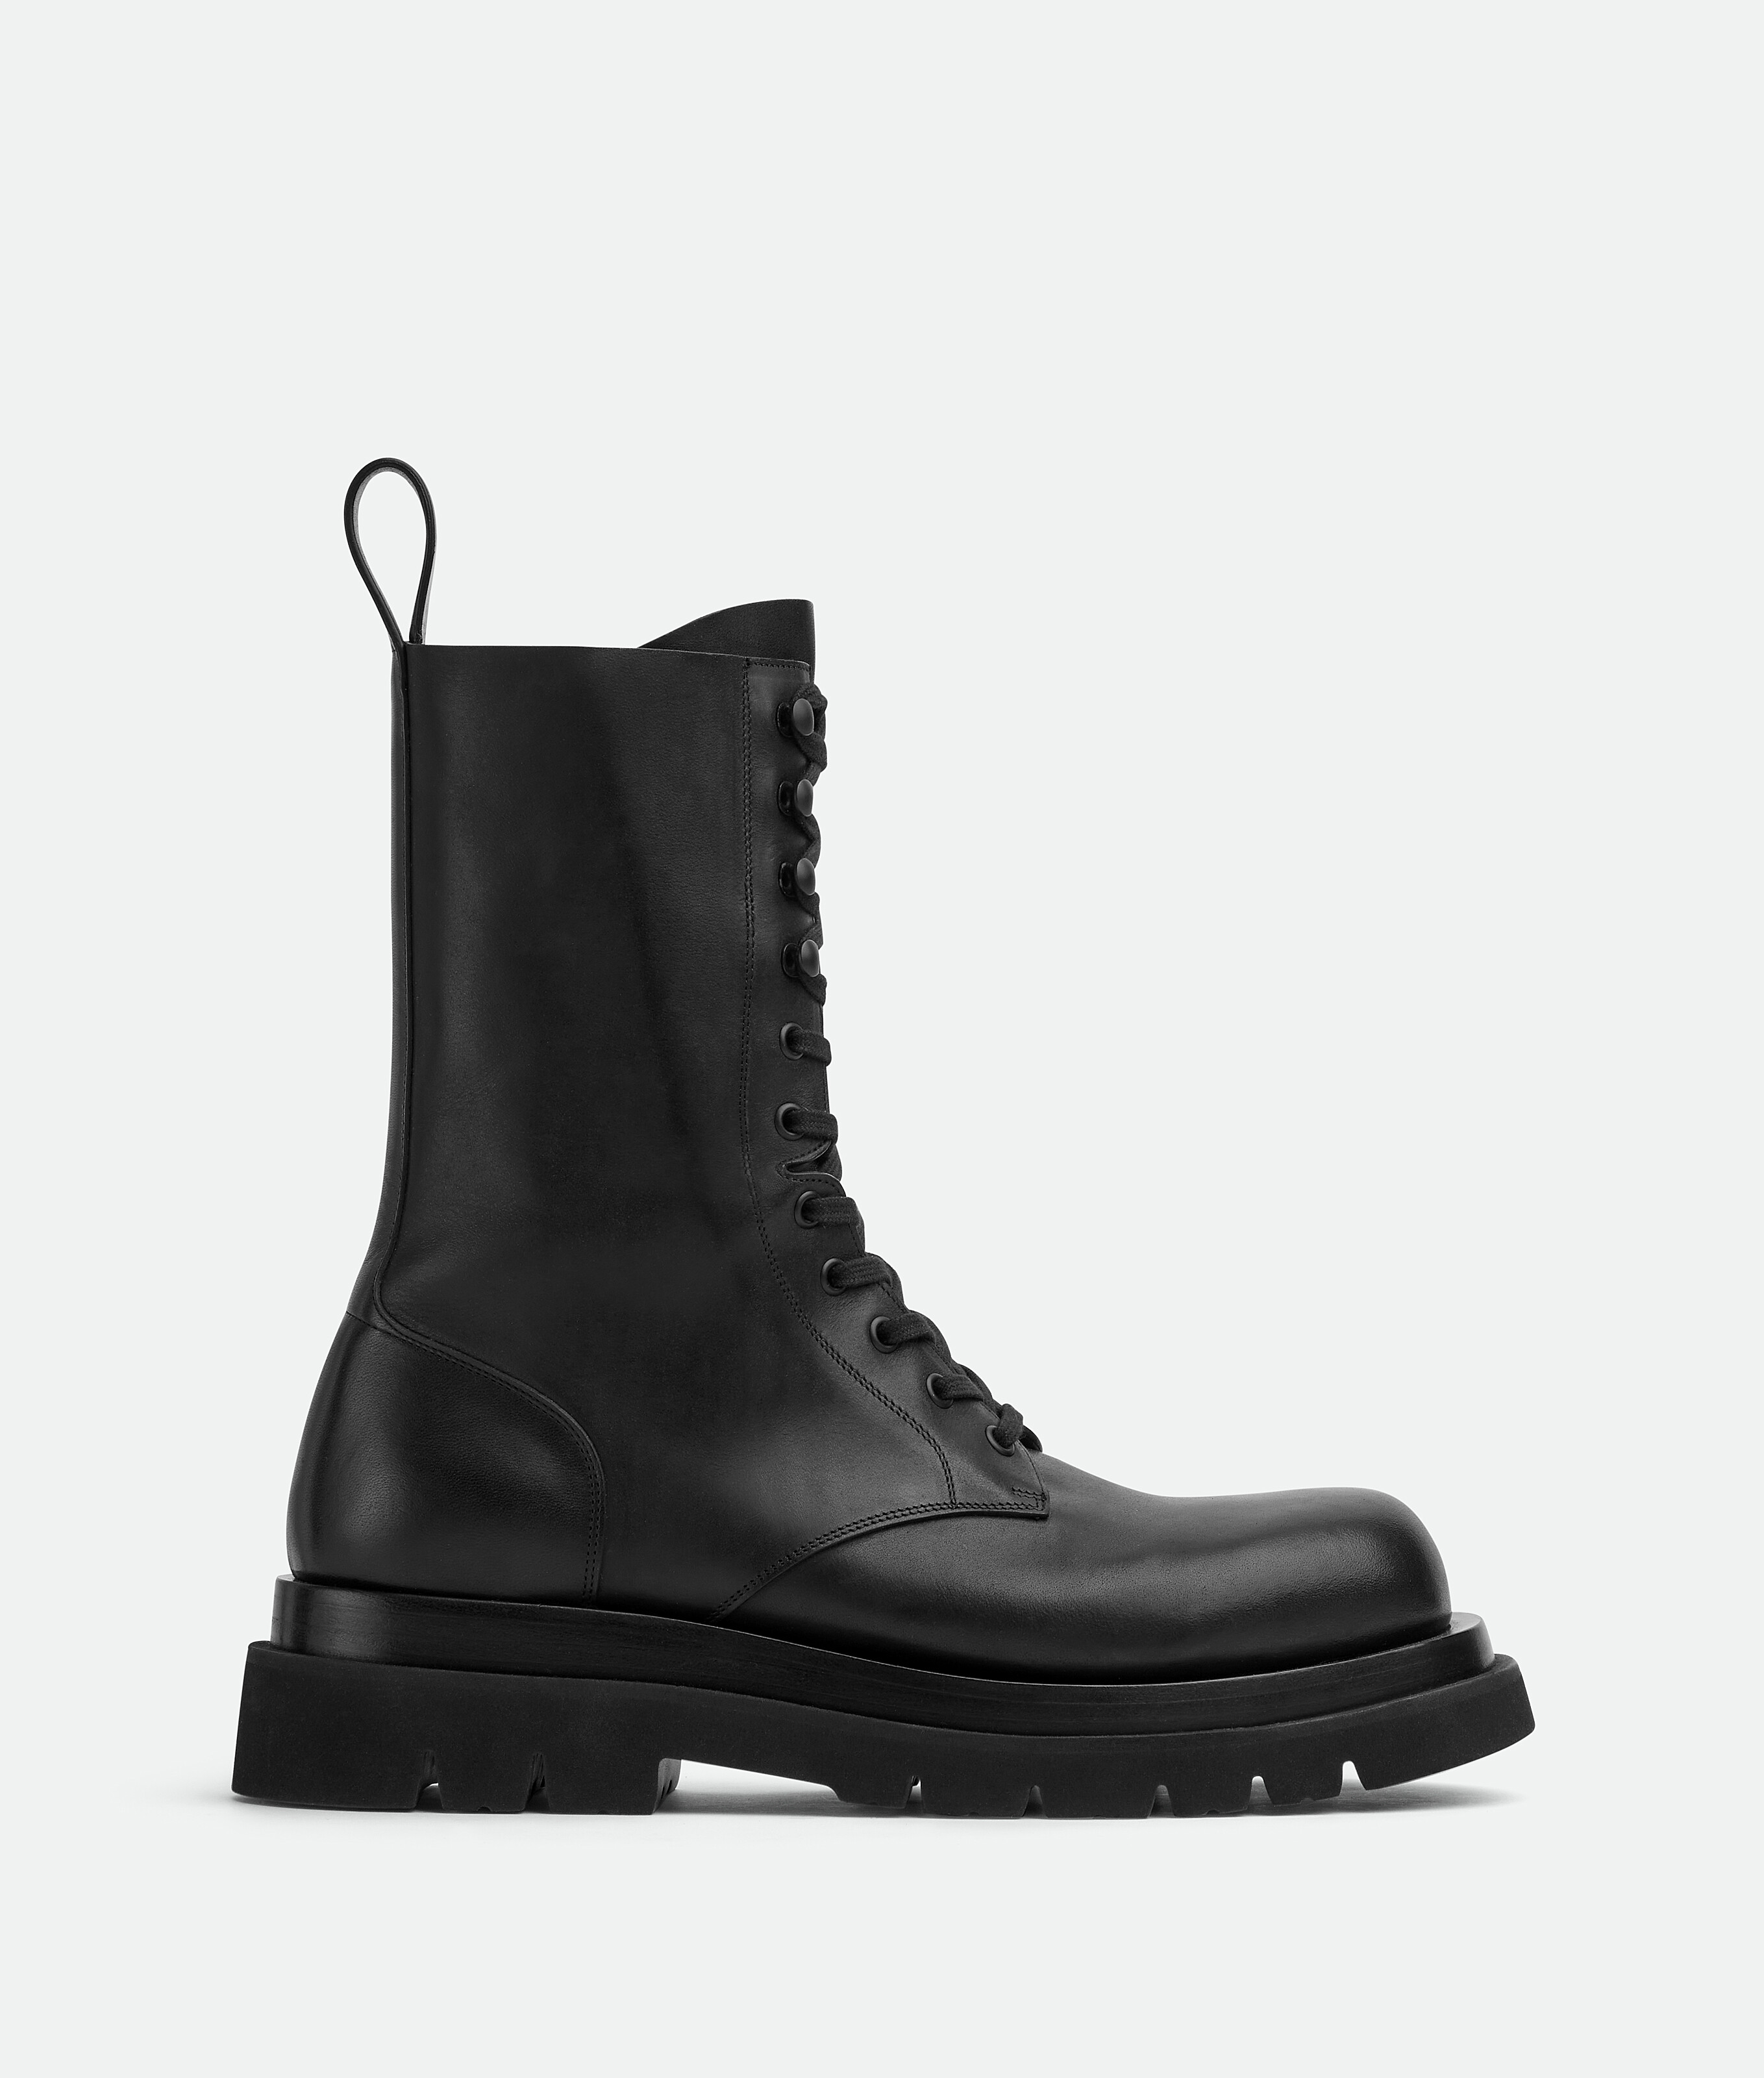 Strike leather boots Balenciaga Black size 43 EU in Leather  21895964